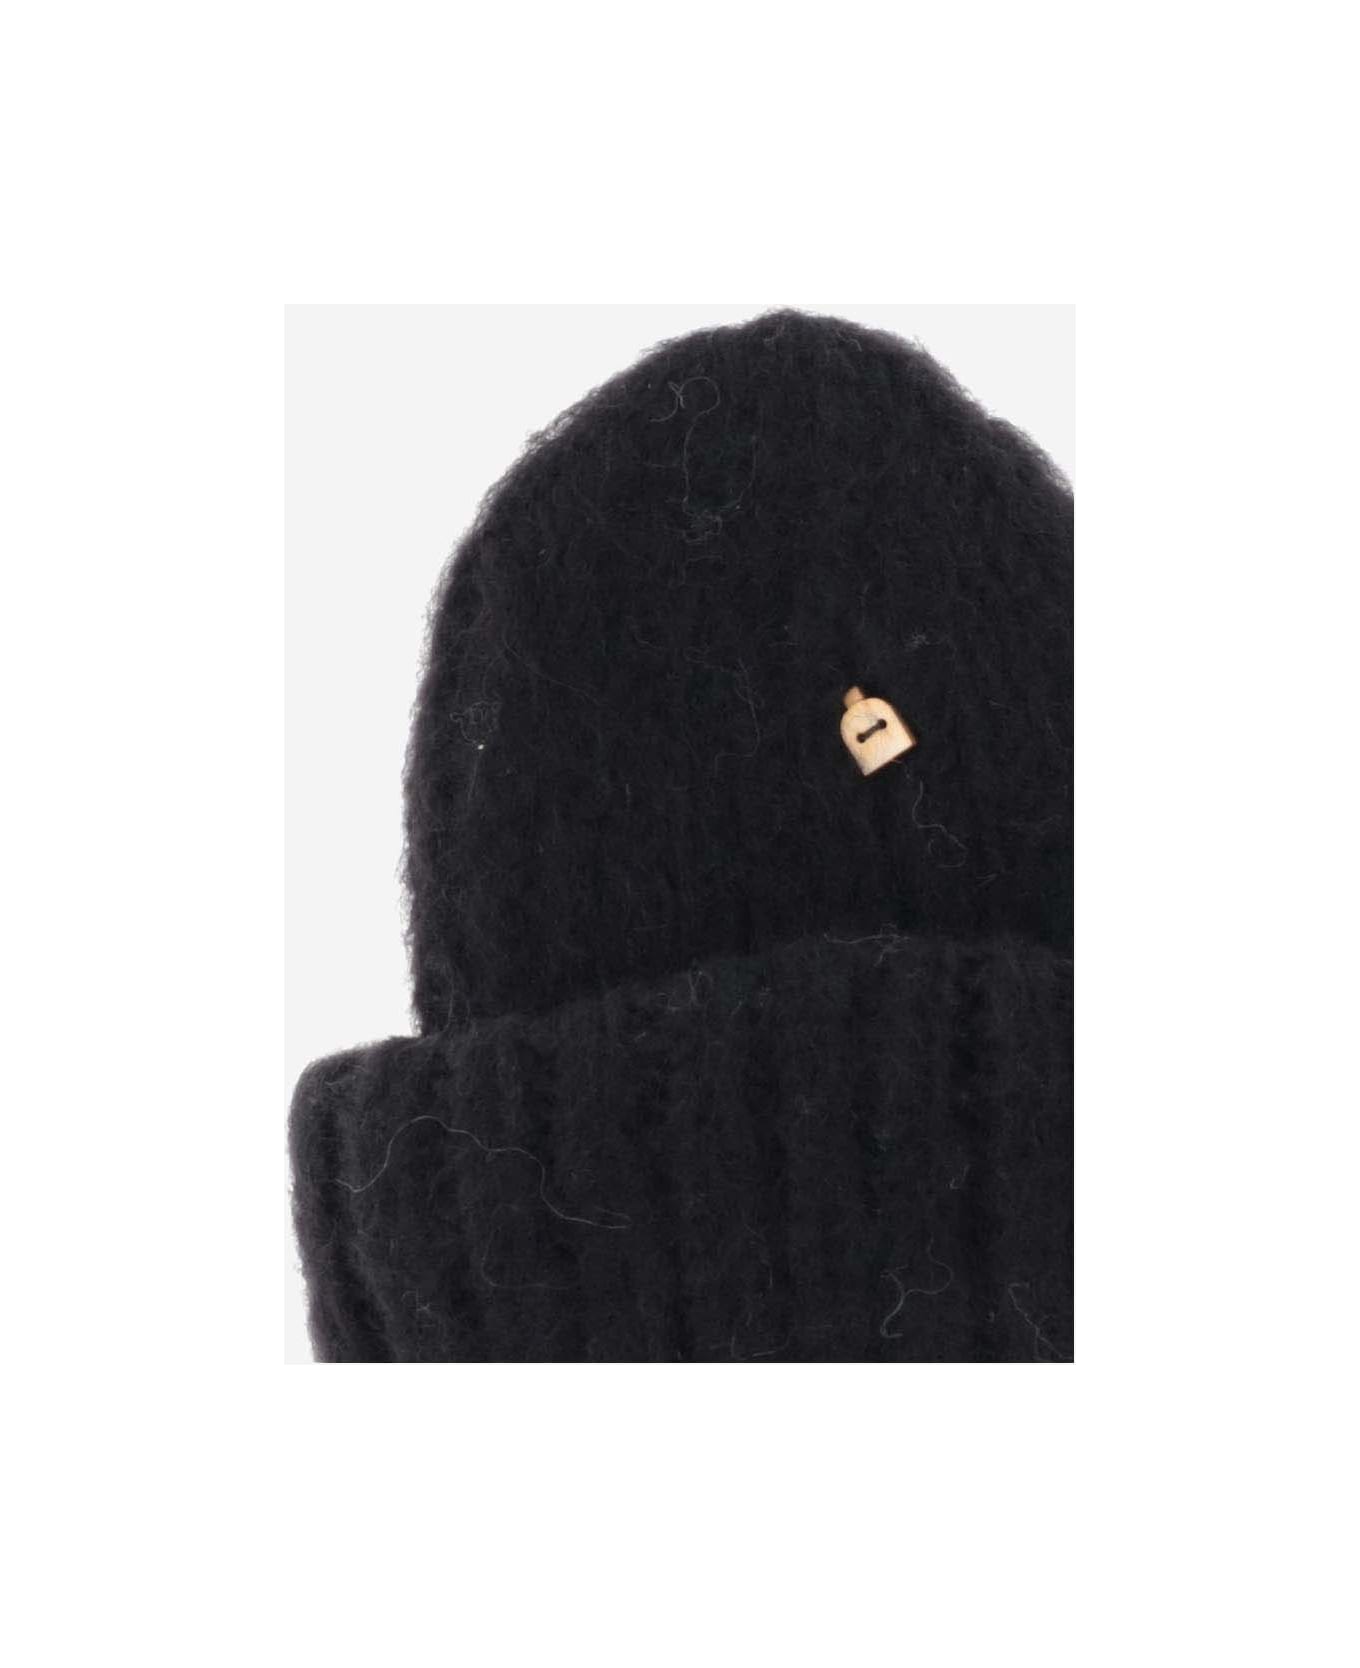 Myssy Wool Beanie Hat - Black